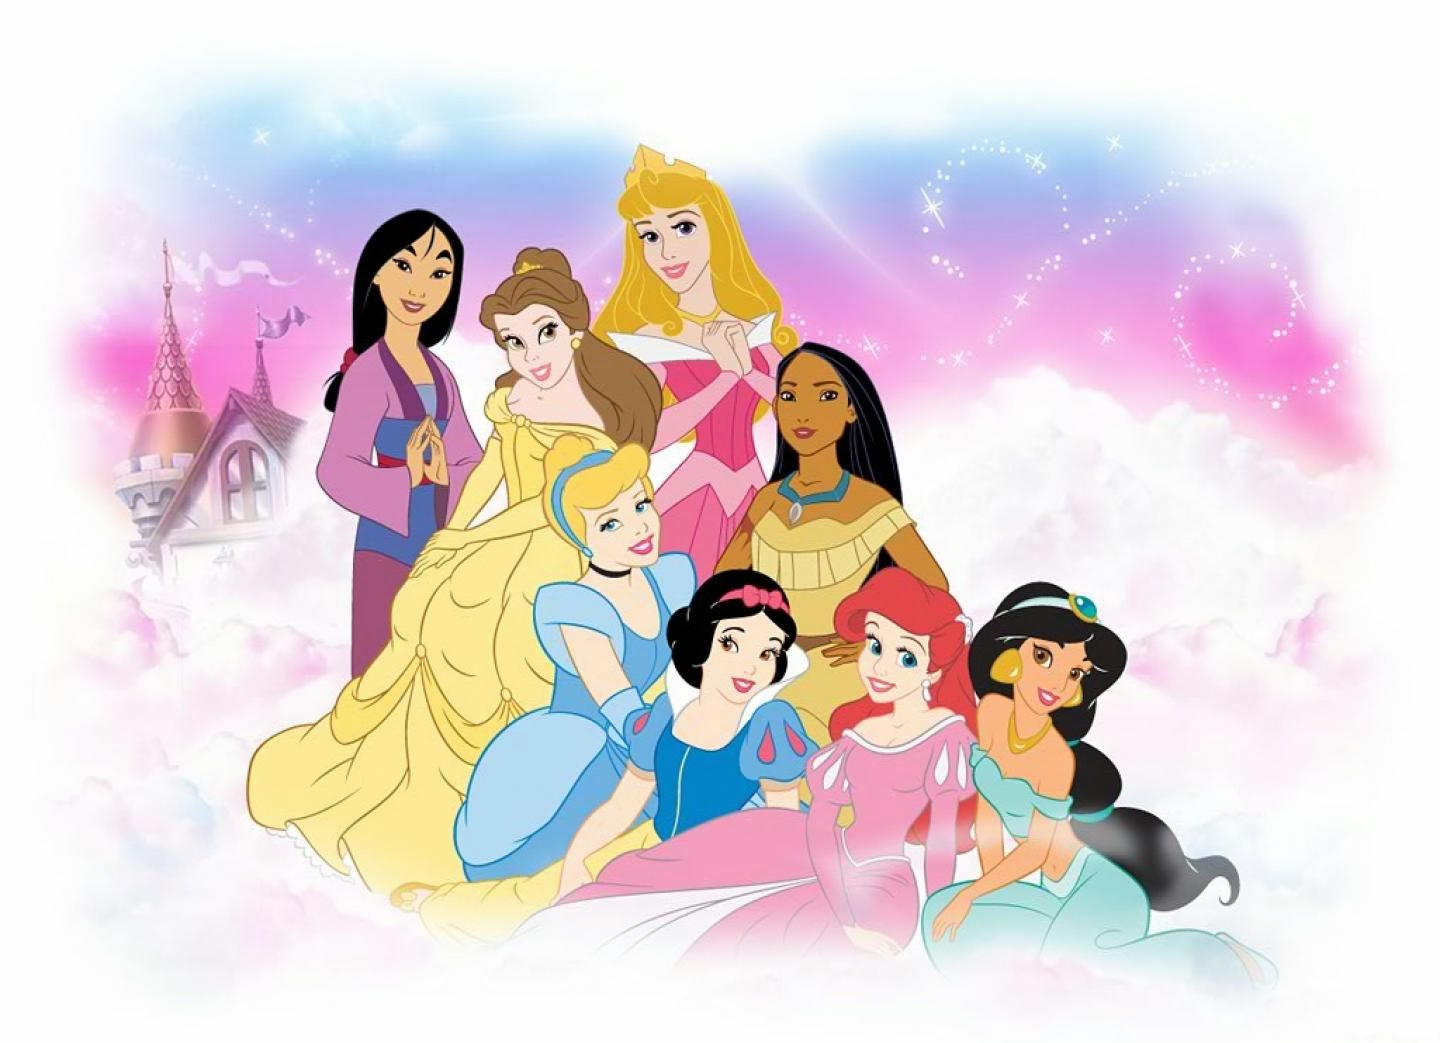 Disney princess wallpapers free download